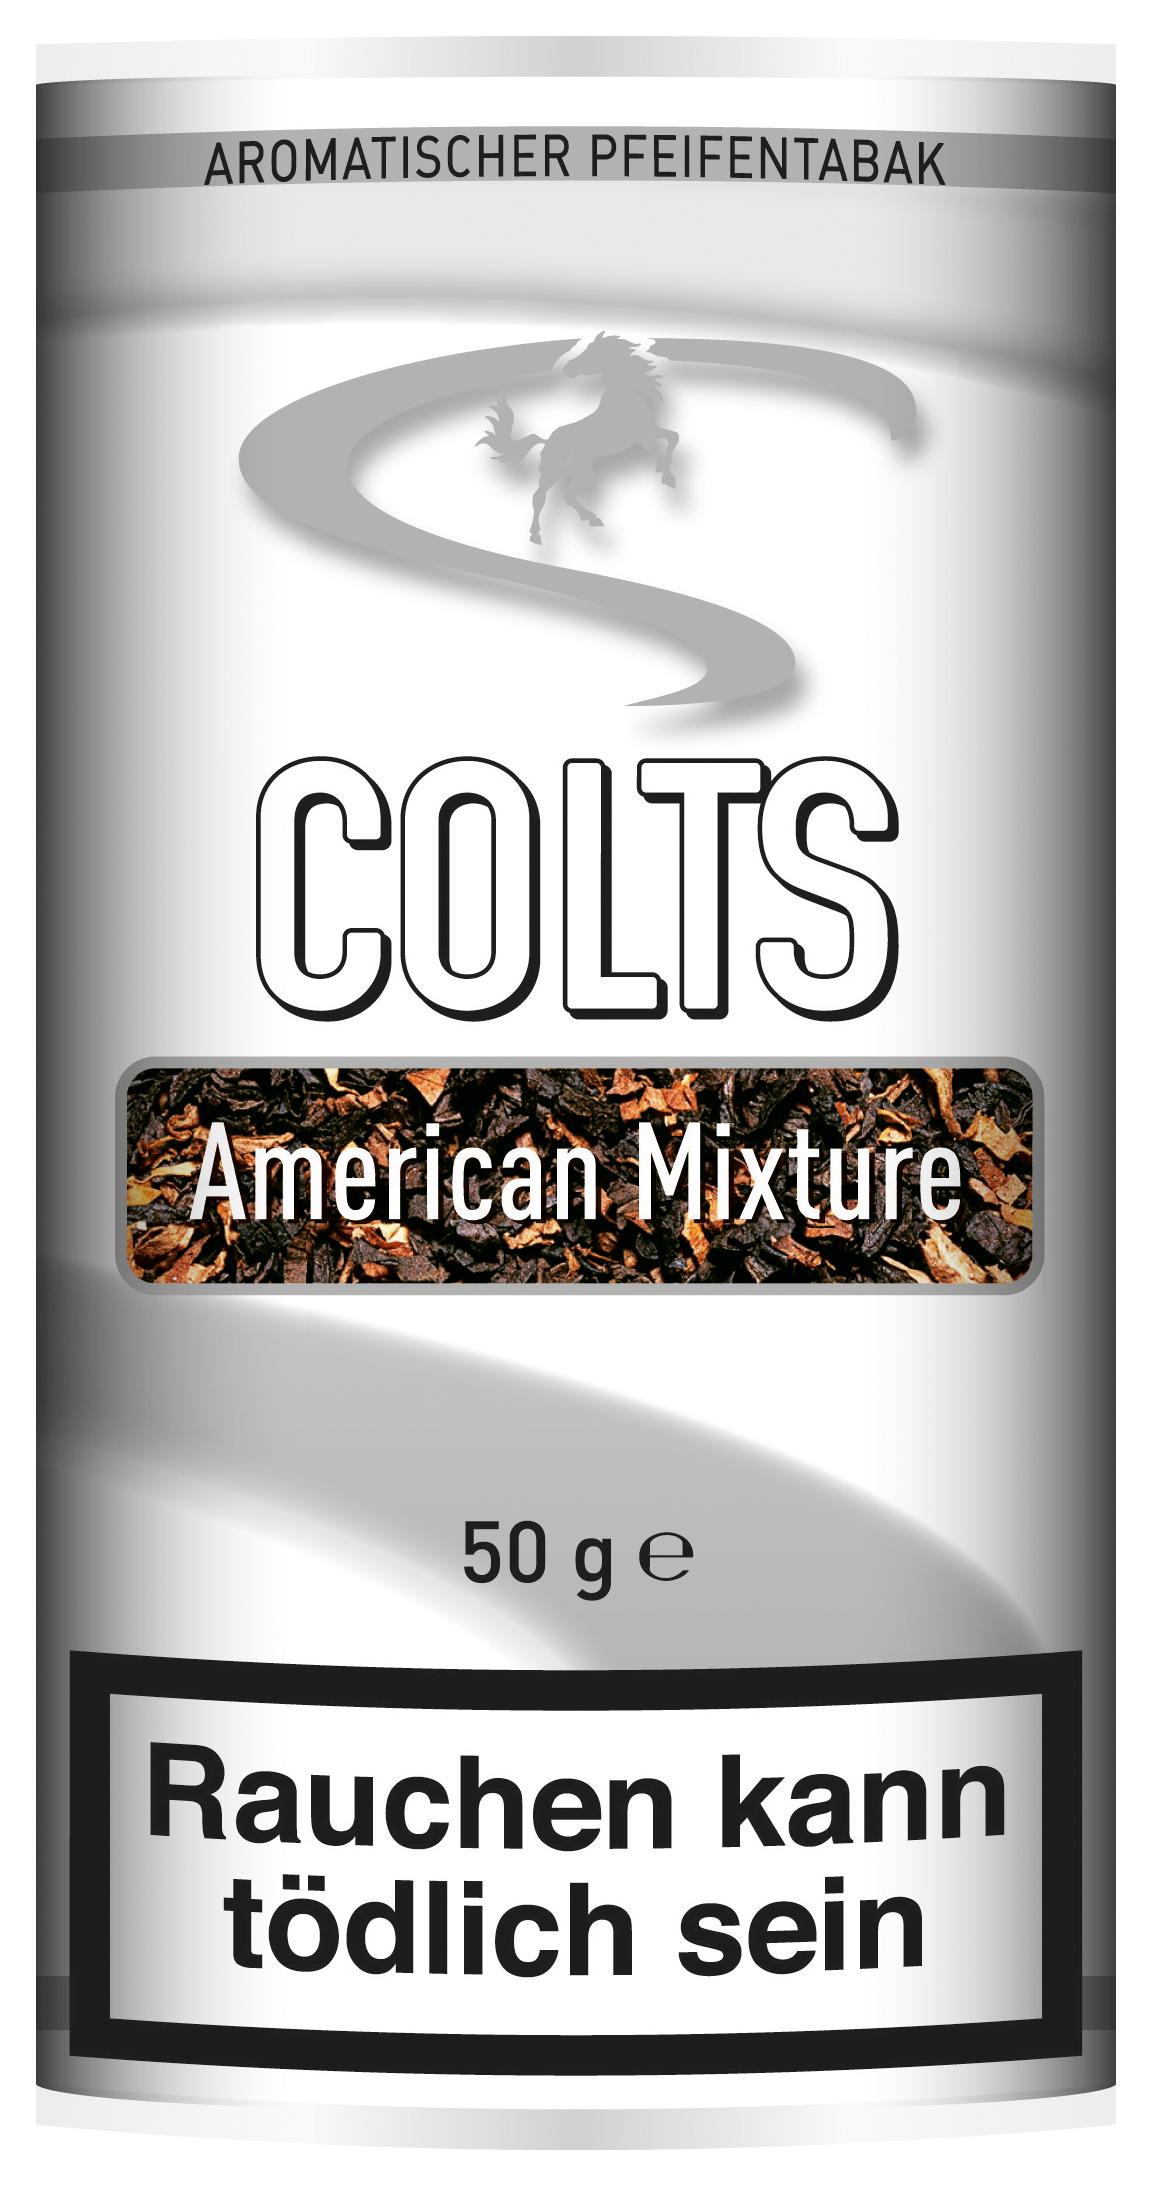 Colts American Mixture 1 x 50g Pfeifentabak 50g